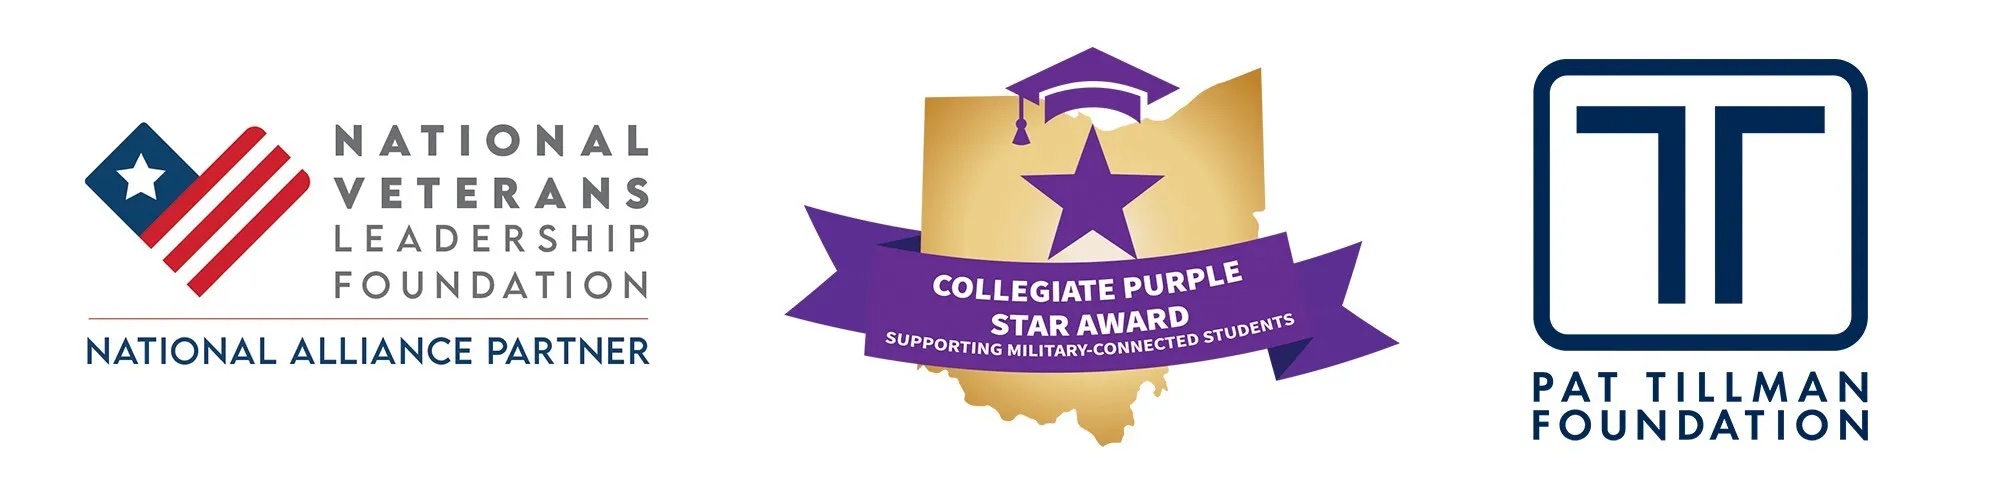 National Veterans Leadership Foundation, Collegiate Purple Star Award, Pat Tillman Foundation 